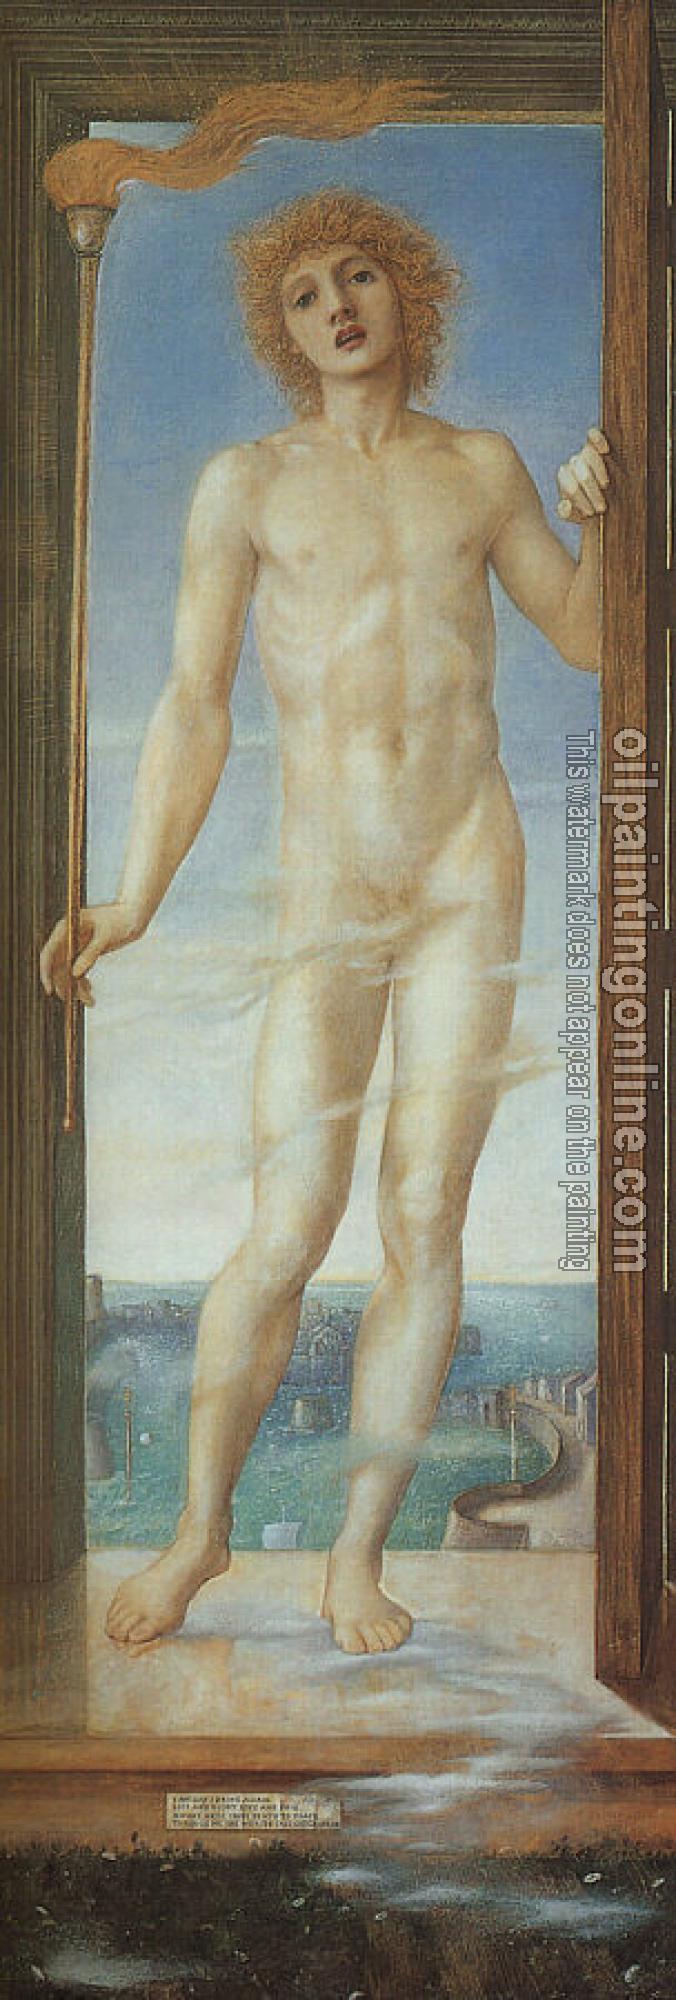 Burne-Jones, Sir Edward Coley - Day